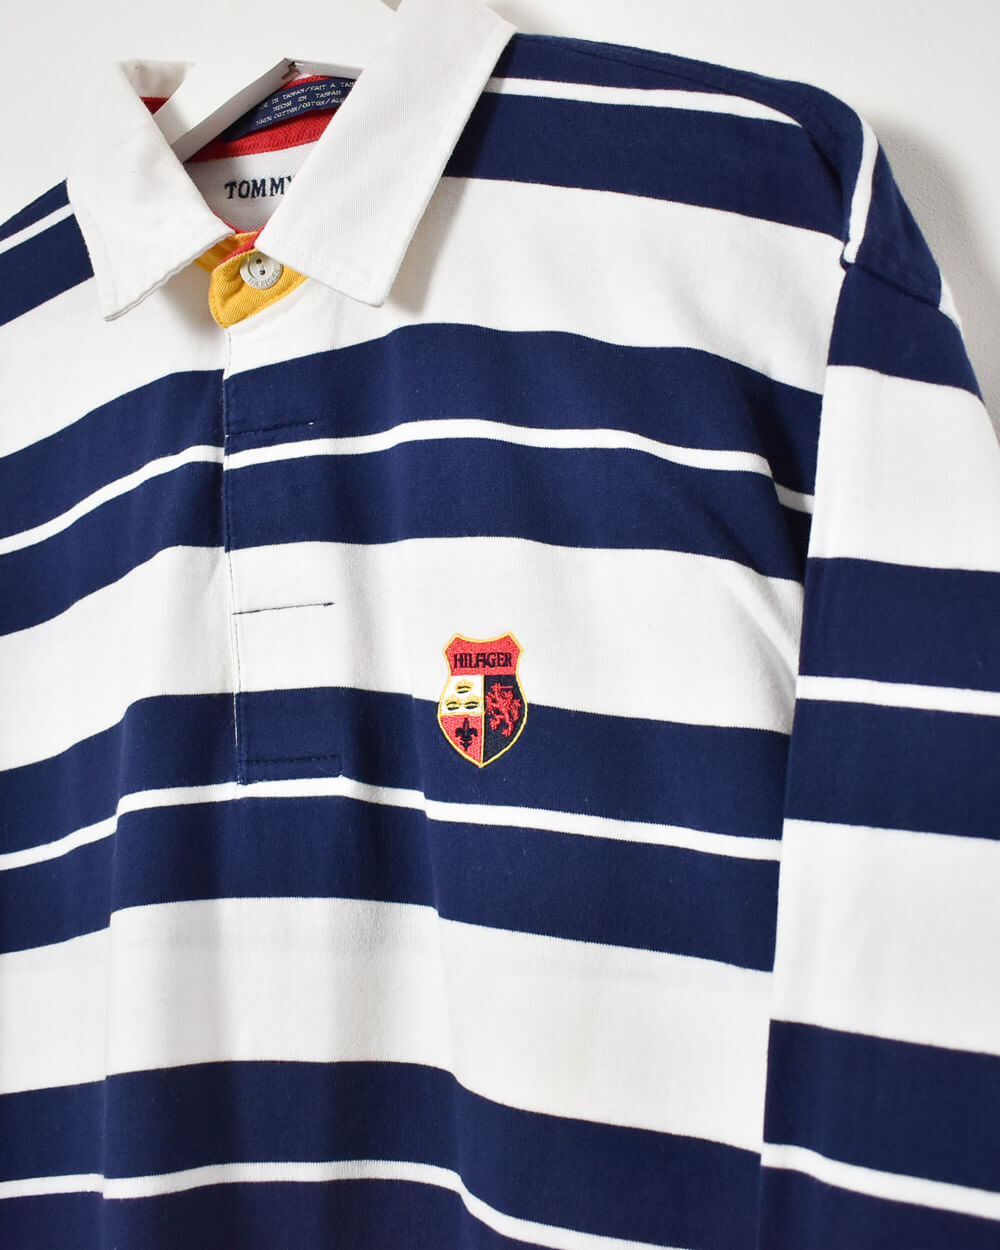 Navy Tommy Hilfiger Rugby Shirt - Medium